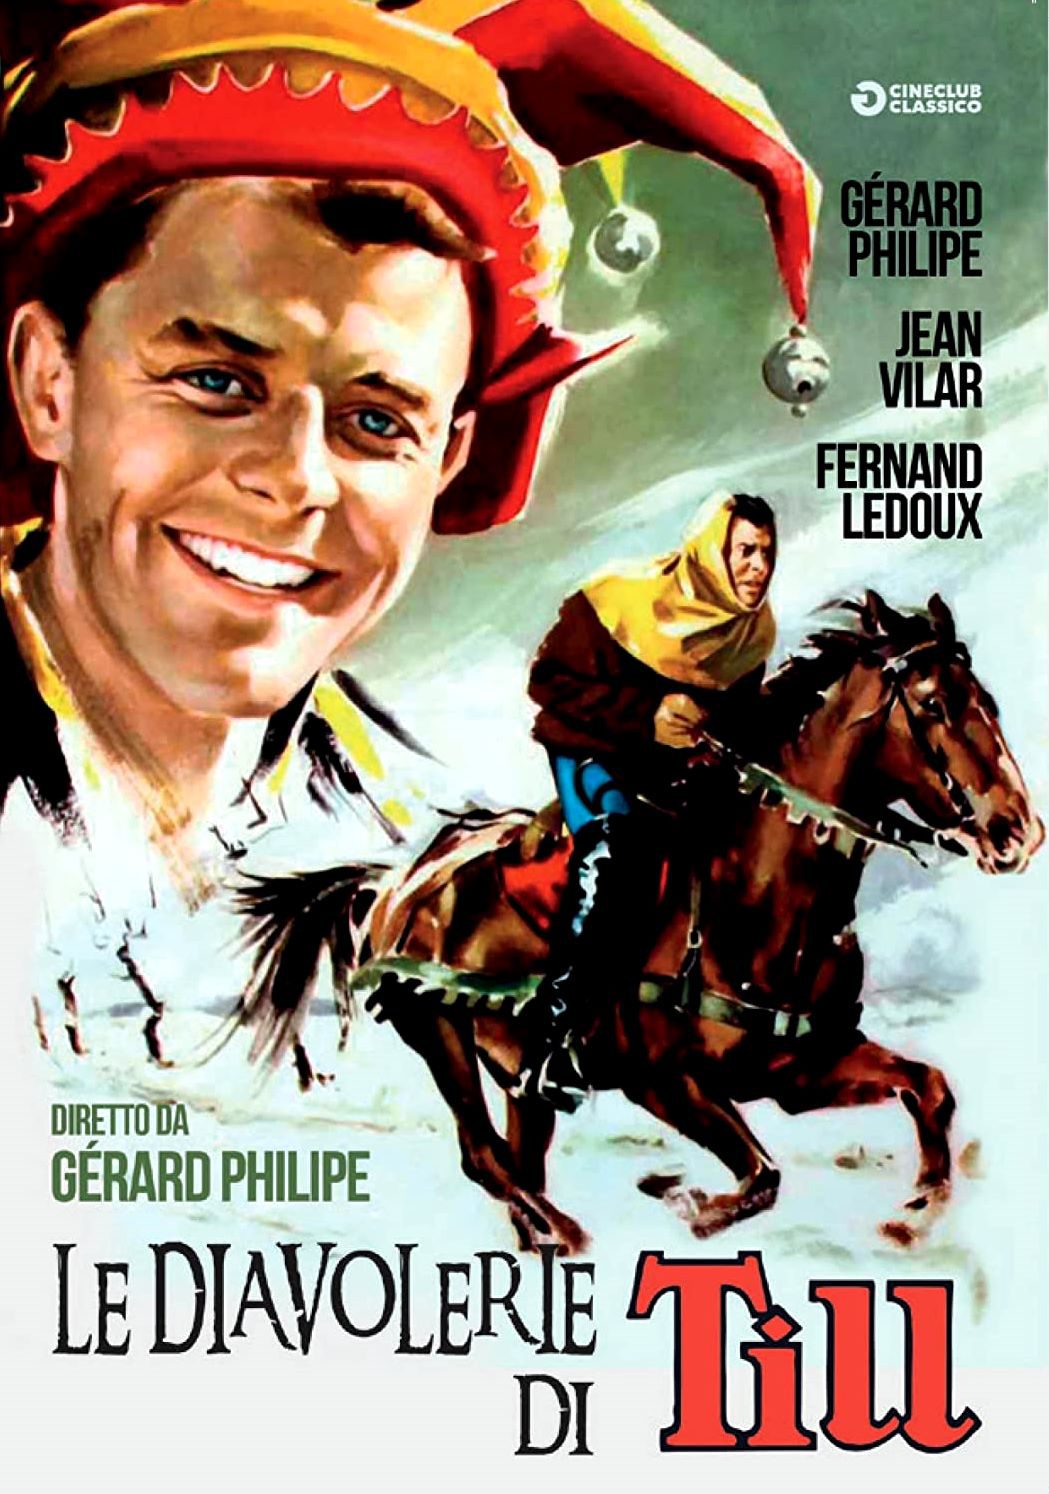 Le diavolerie di Till [HD] (1956)